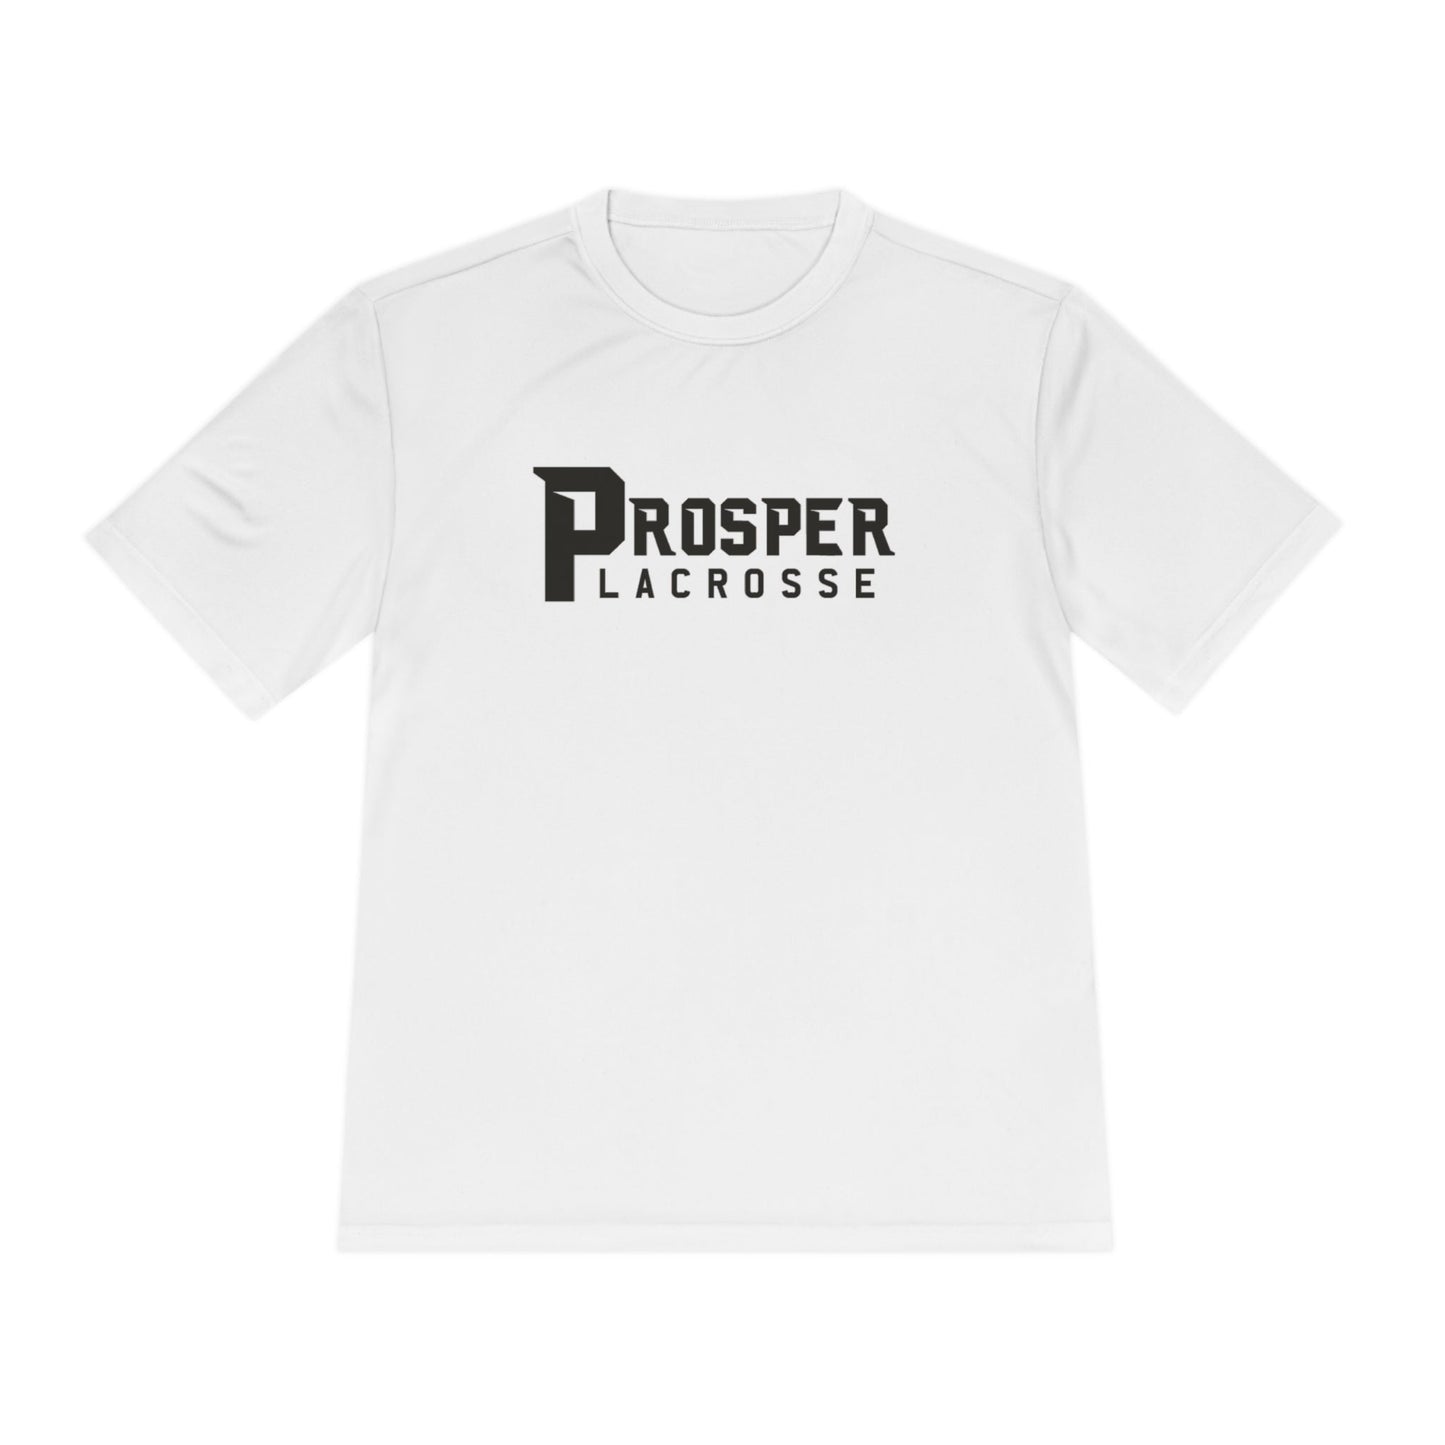 Prosper Youth Lacrosse Athletic T-Shirt Signature Lacrosse